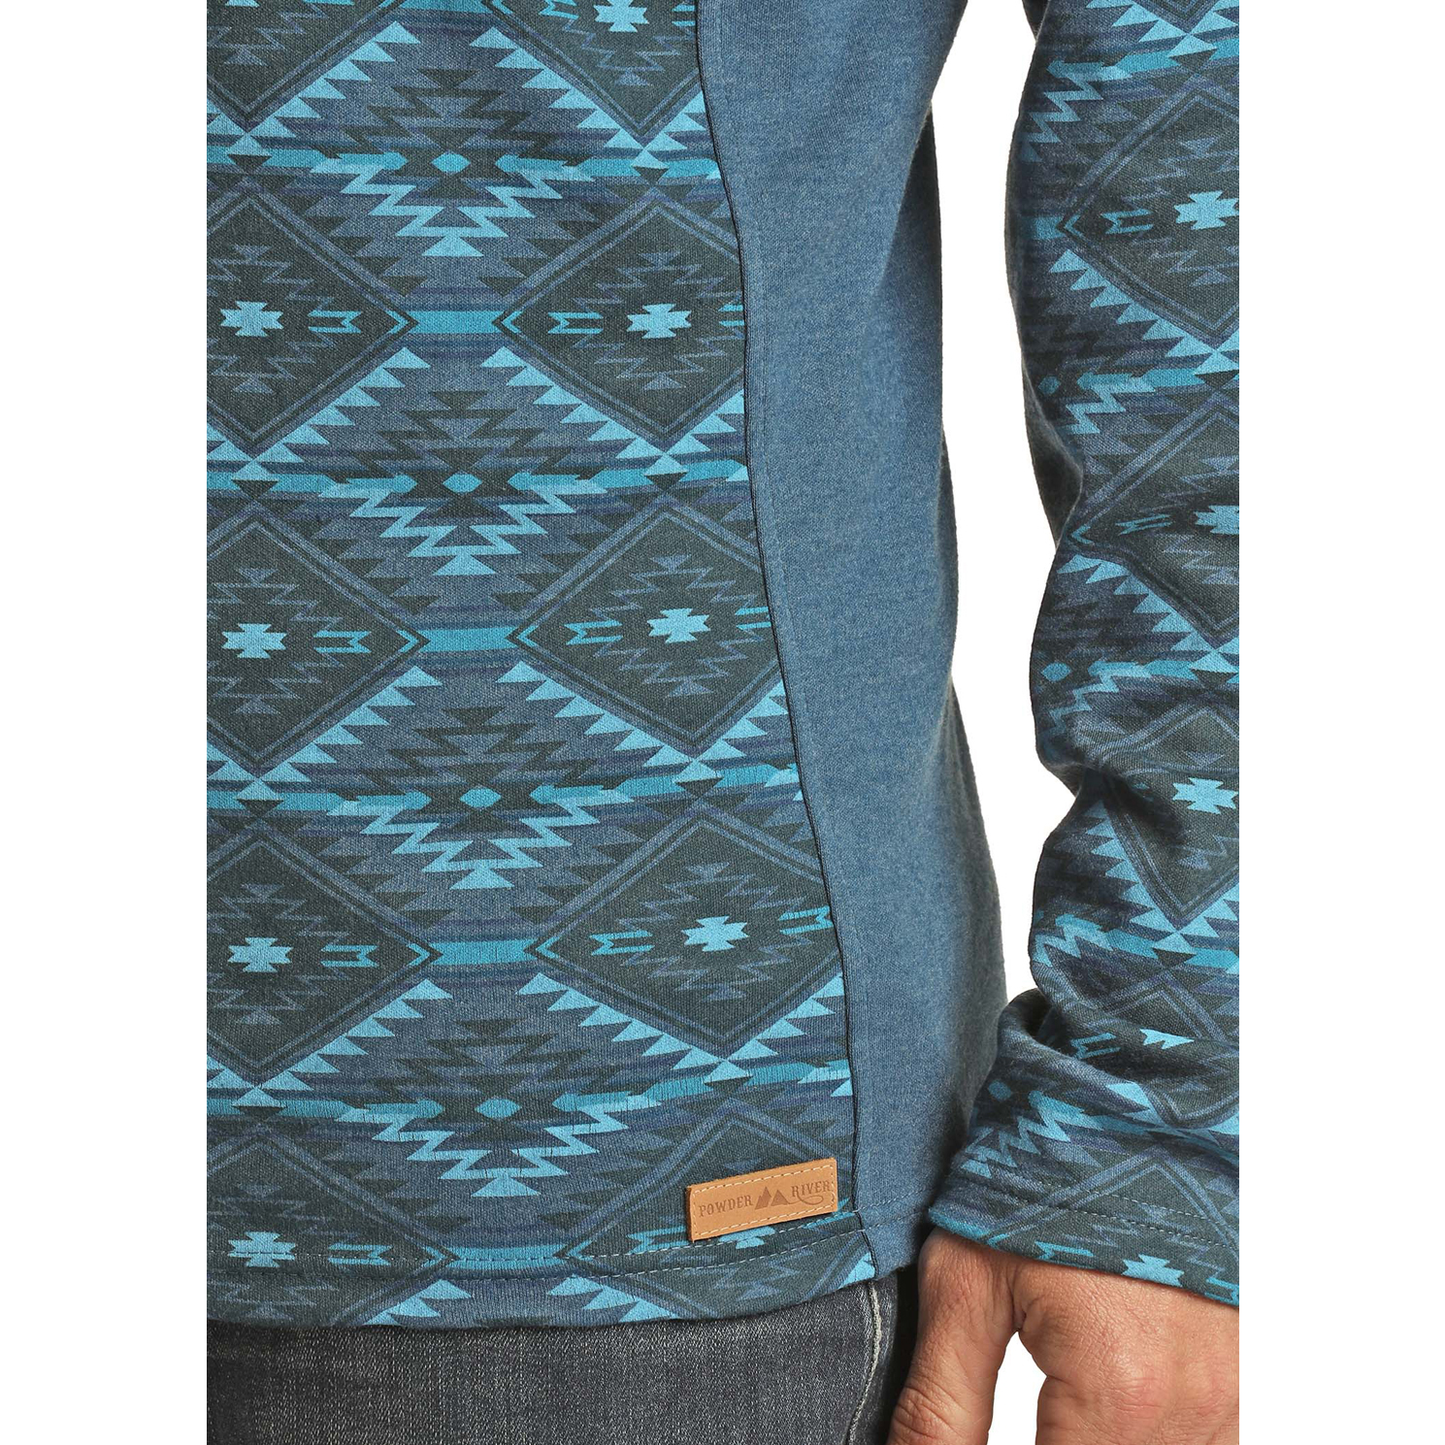 Powder River® Men's Turquoise Quarter Zip Knit Pullover PRMO91RZXR-87